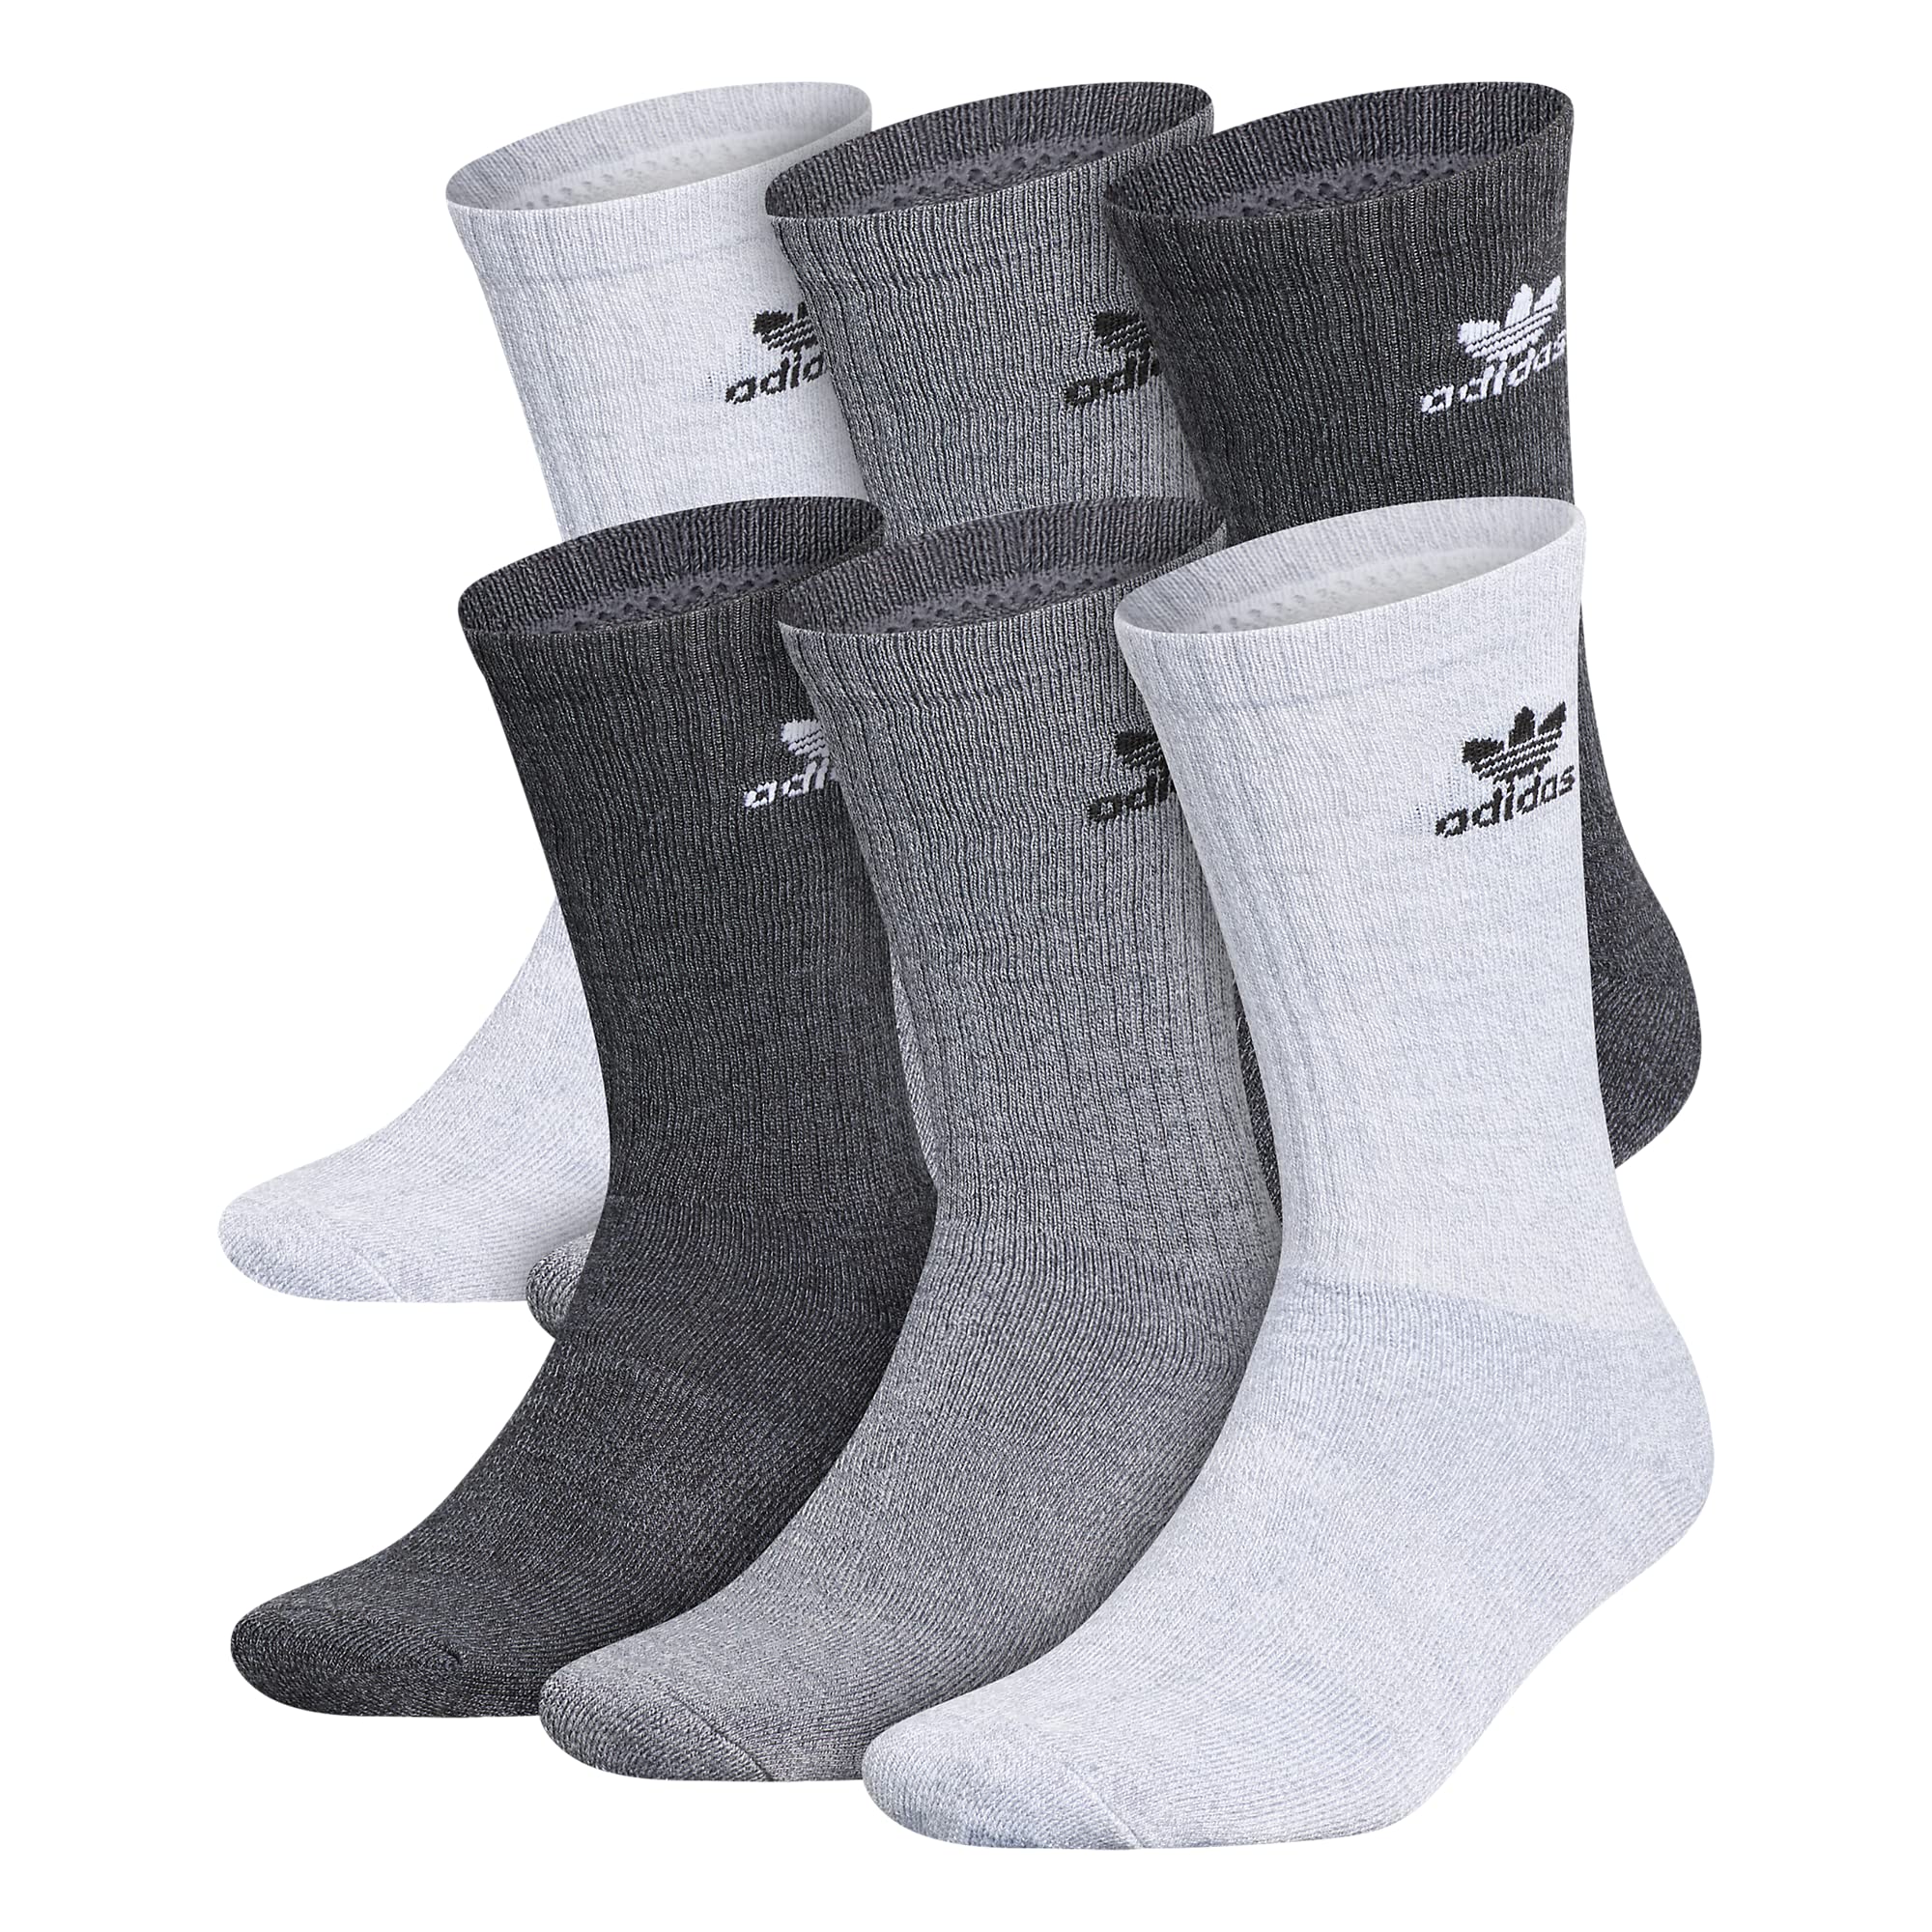 adidas Originals Trefoil Crew Socks (6-Pair), Grey/Onix Grey/Black, Large